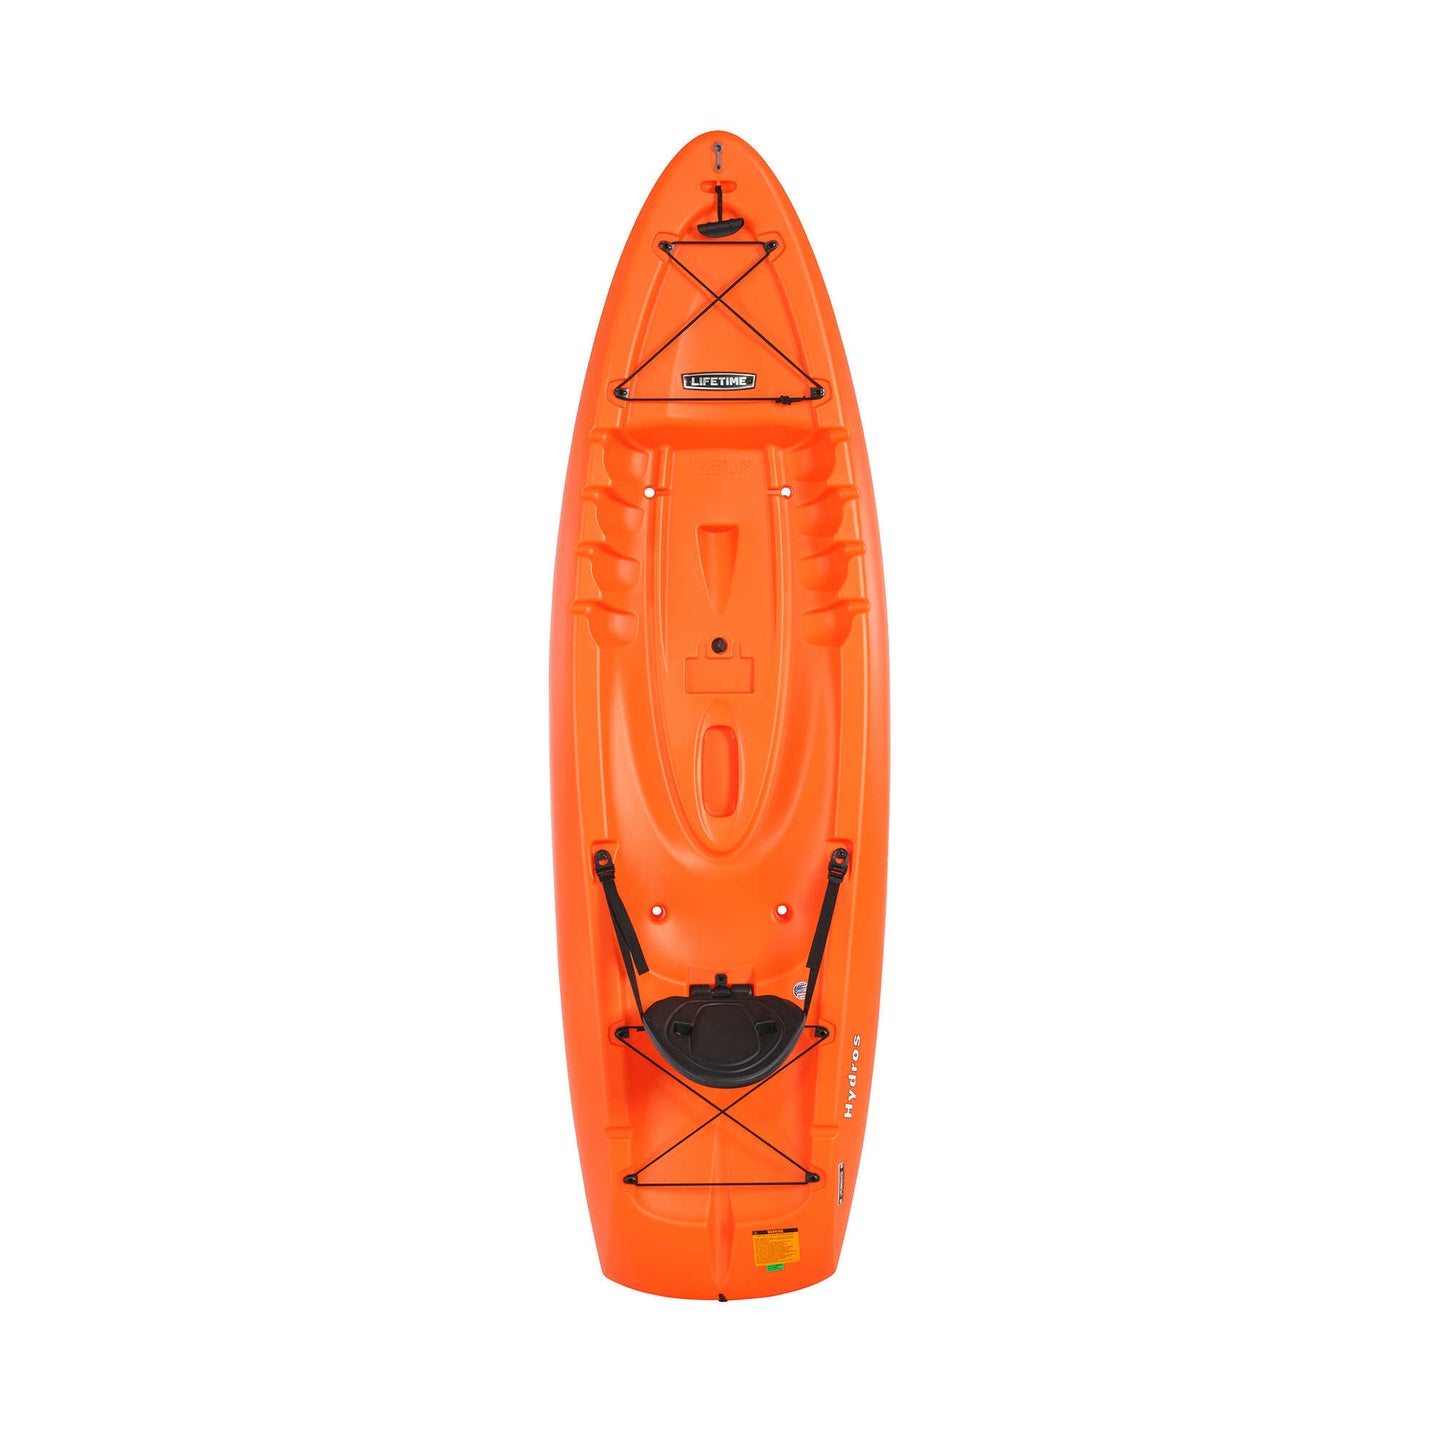 Lifetime Hydros 85 Sit-On-Top Kayak (Paddle Included) - Orange